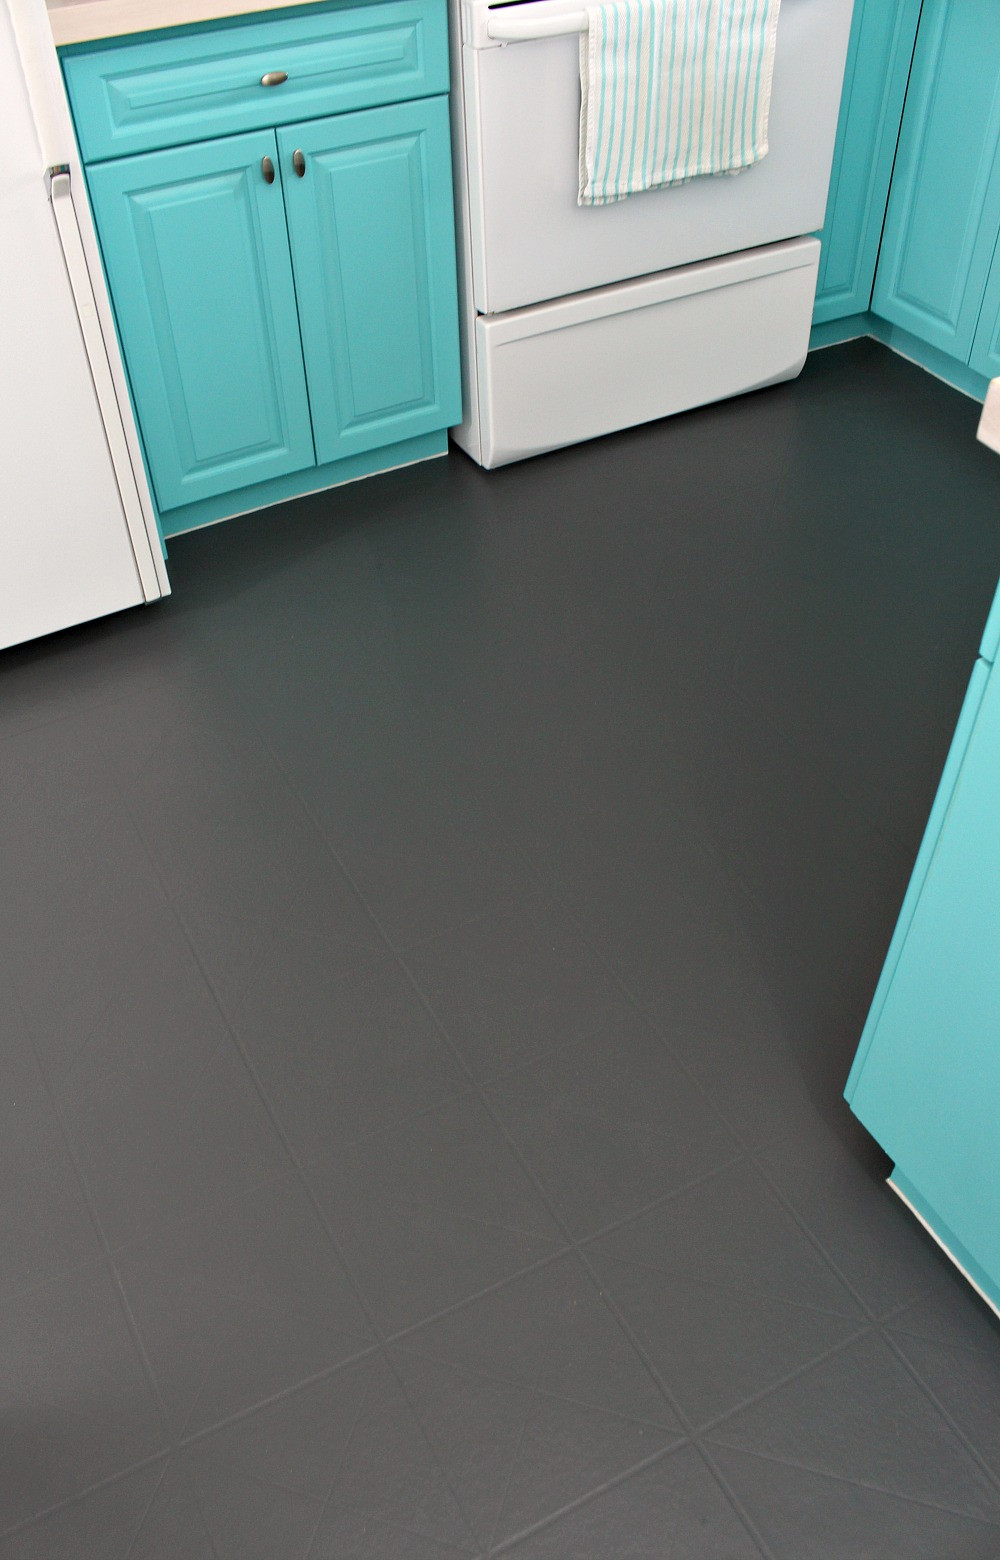 Painted Kitchen Floor Tiles
 How to Paint a Vinyl Floor DIY Painted Floors